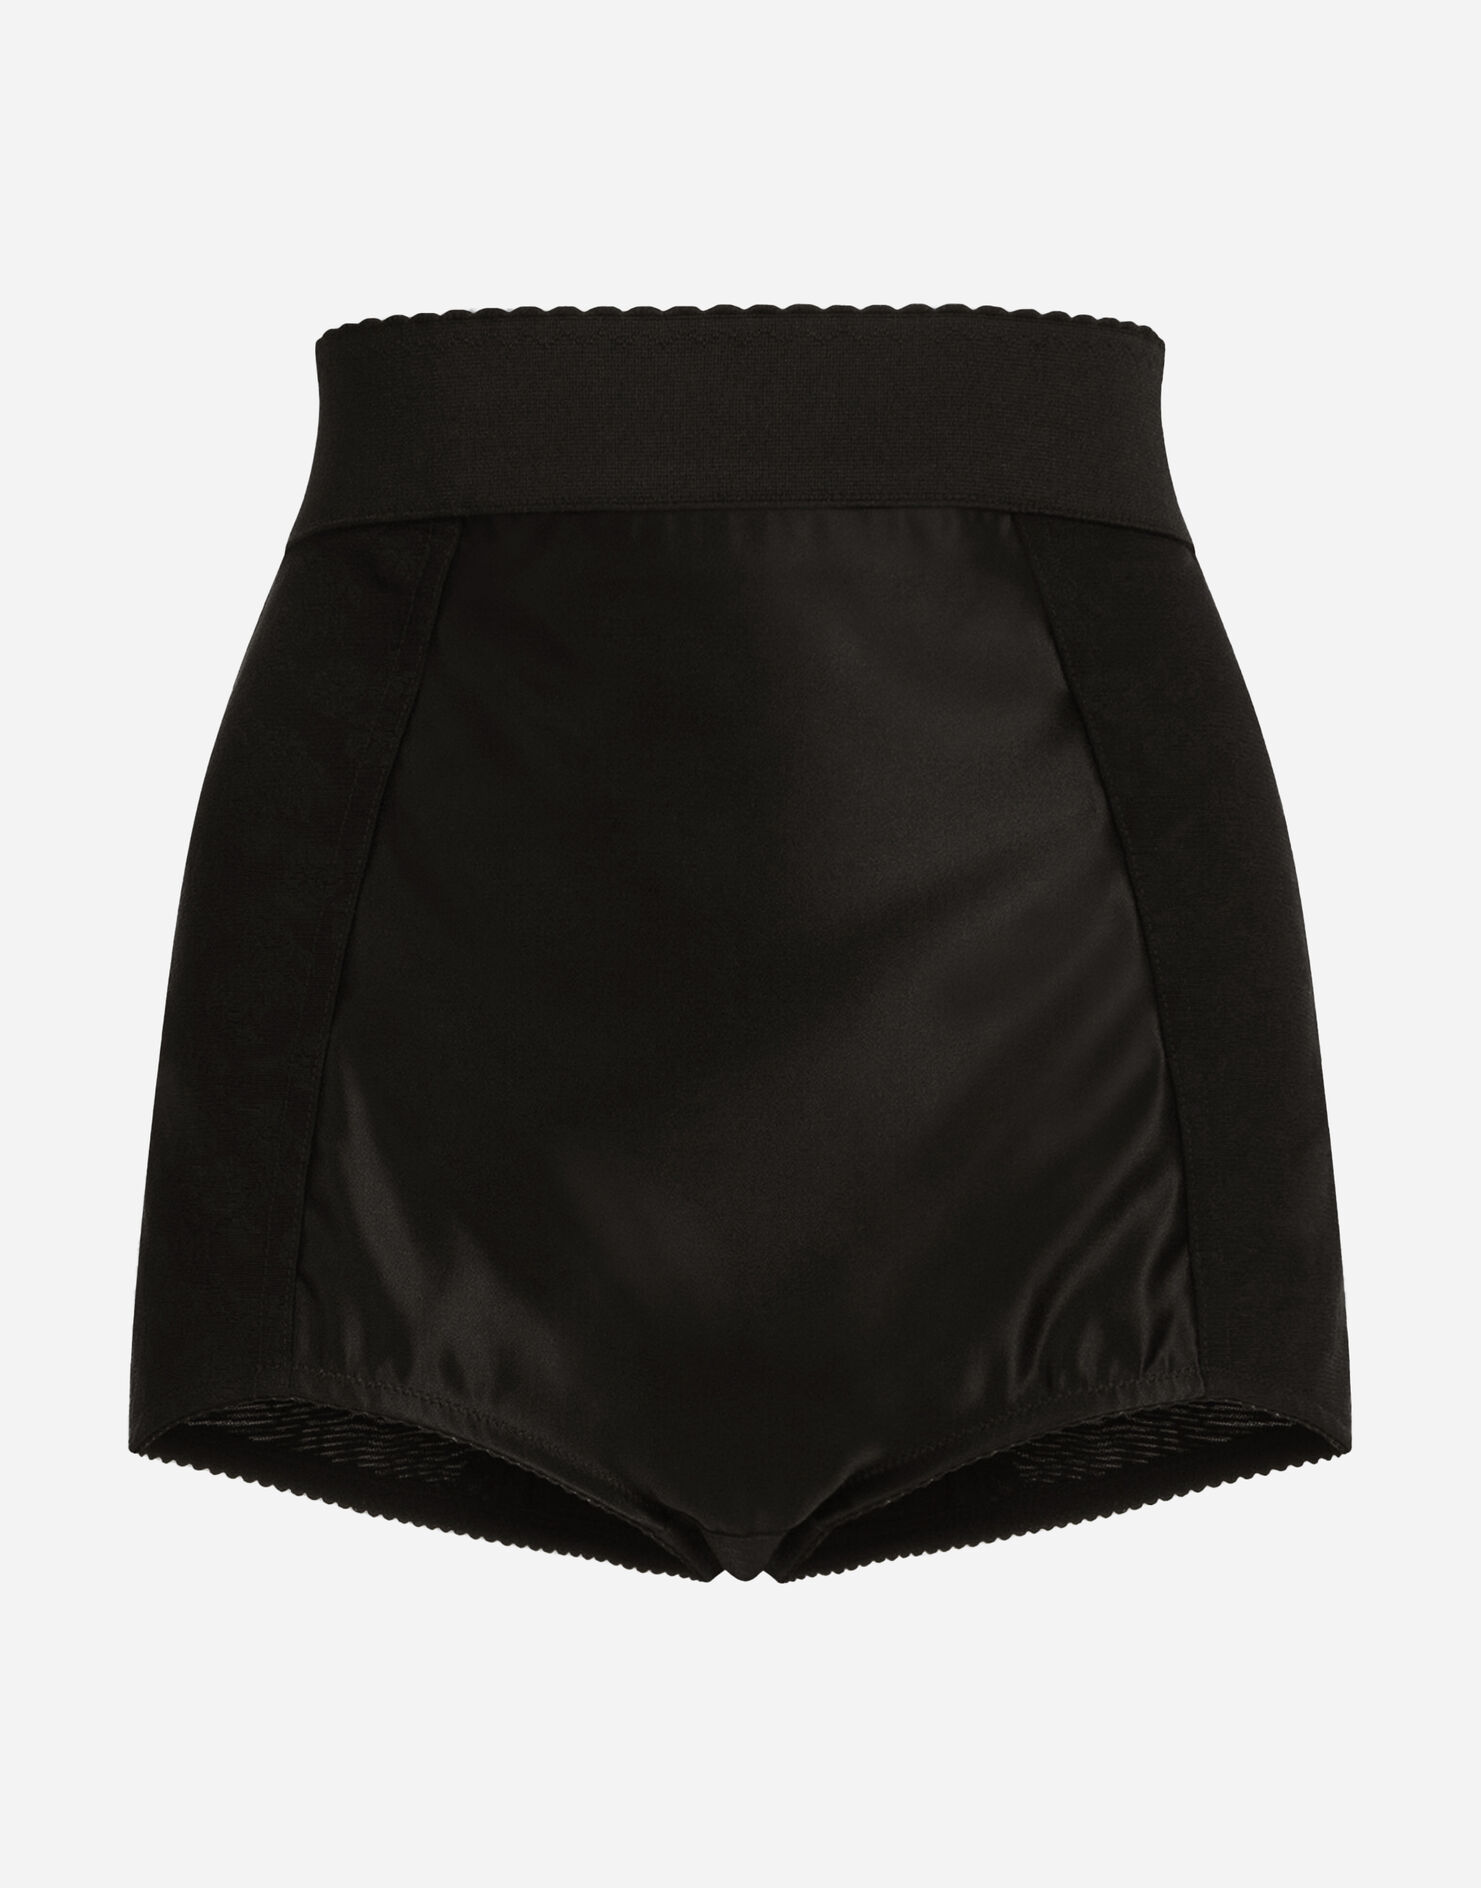 Corset-style culotte in Black